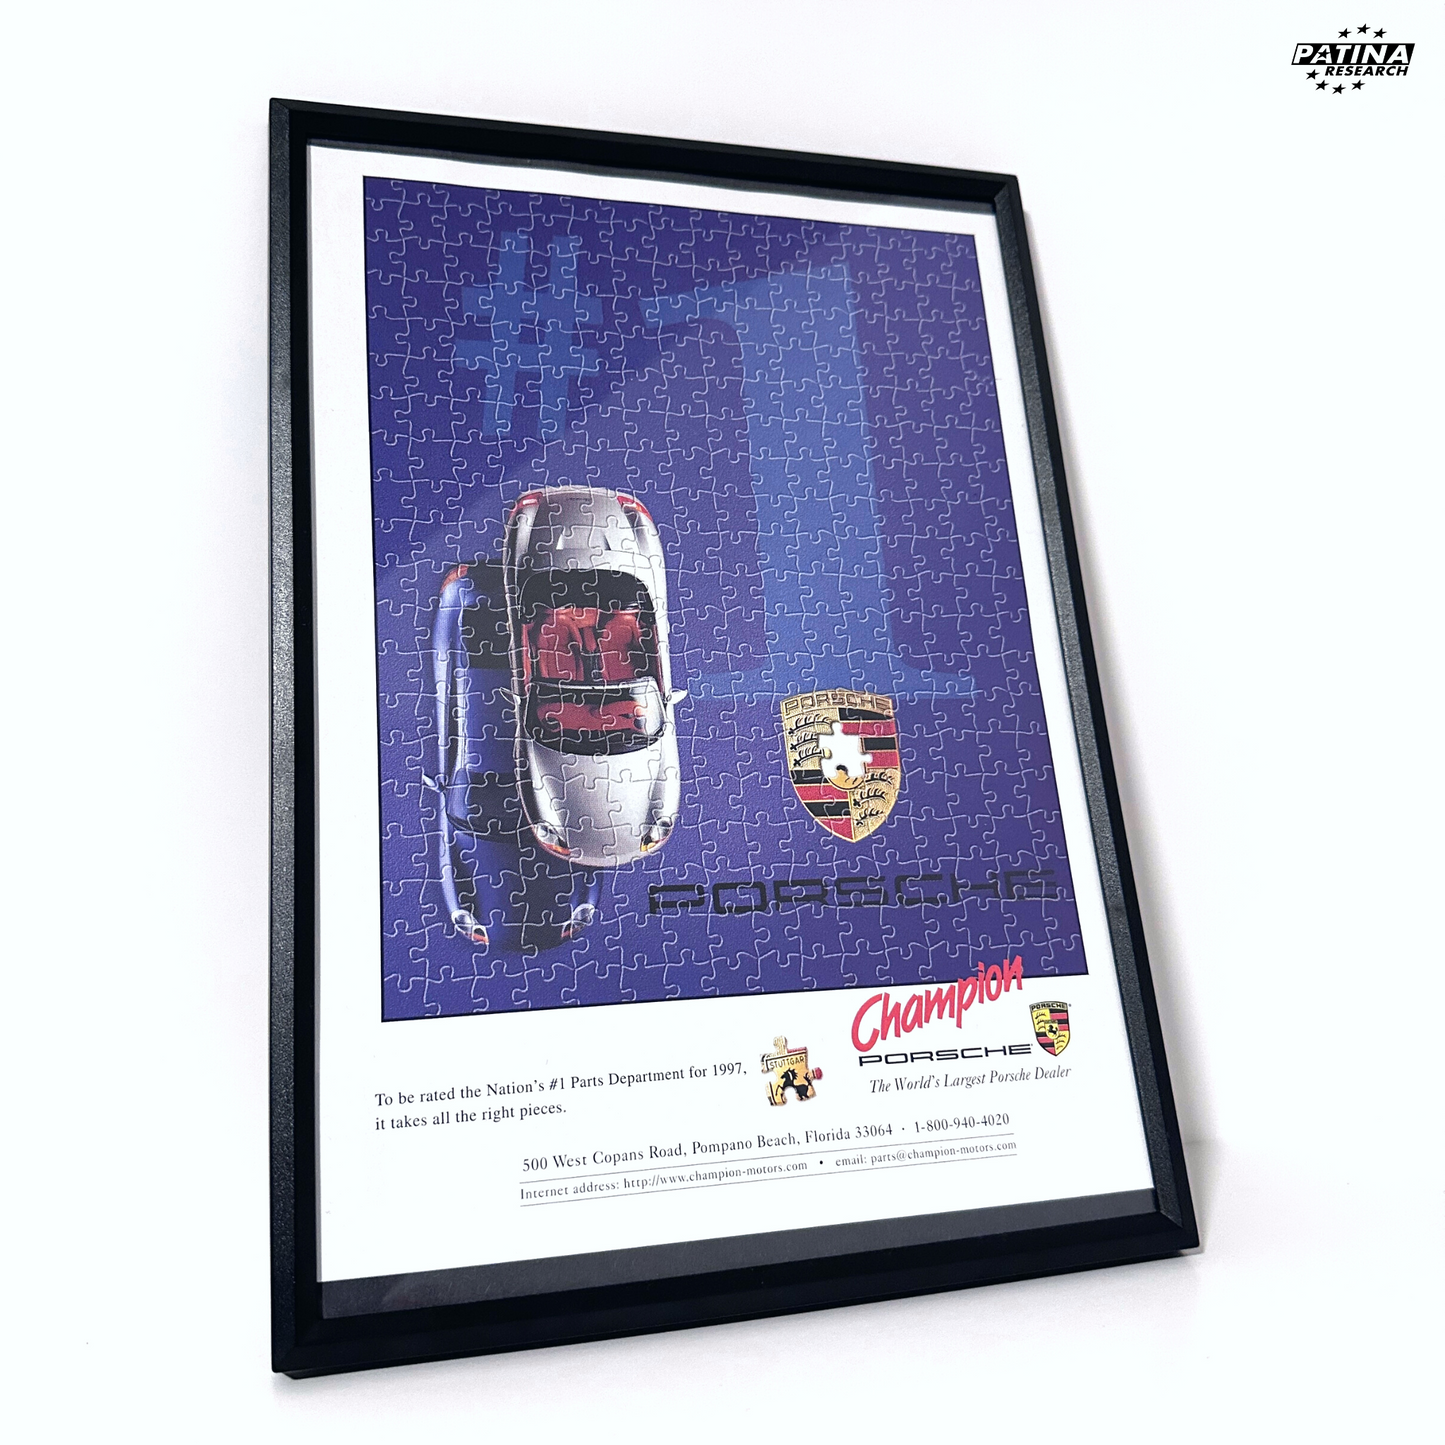 Porsche champion puzzle framed ad